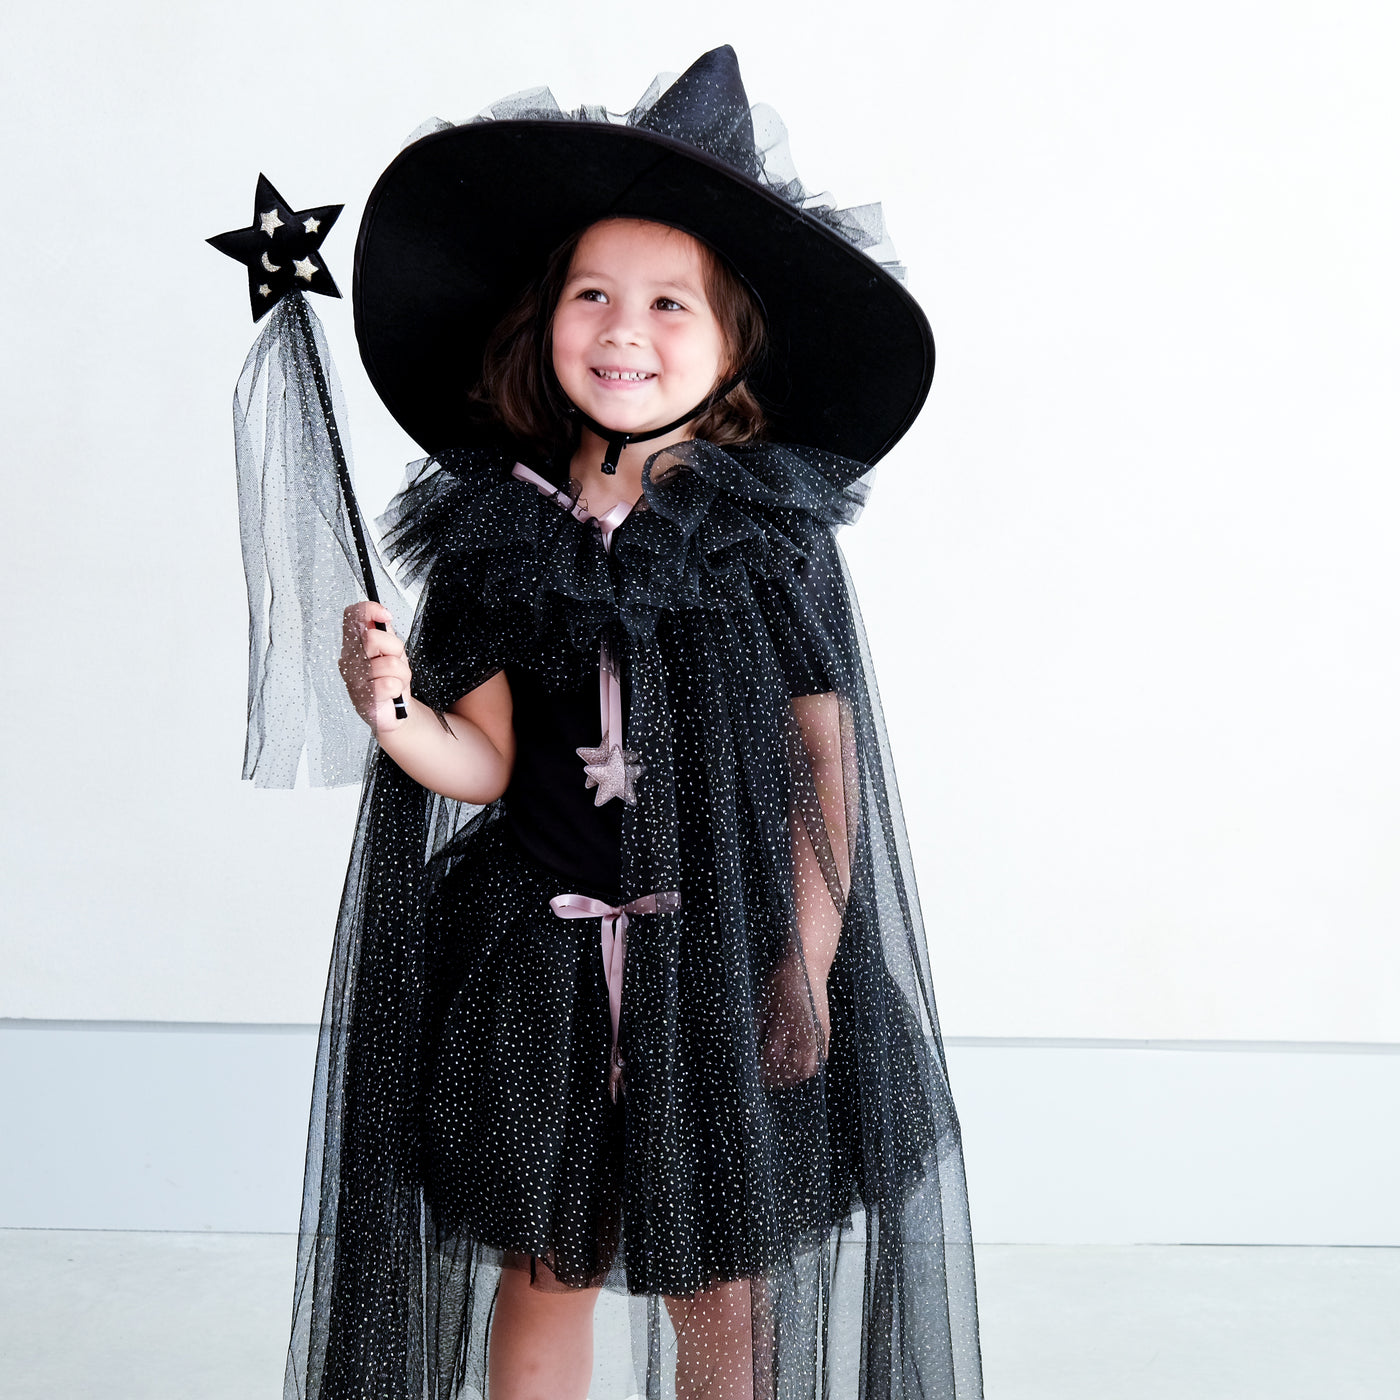 Esmerelda ruffle witch cape